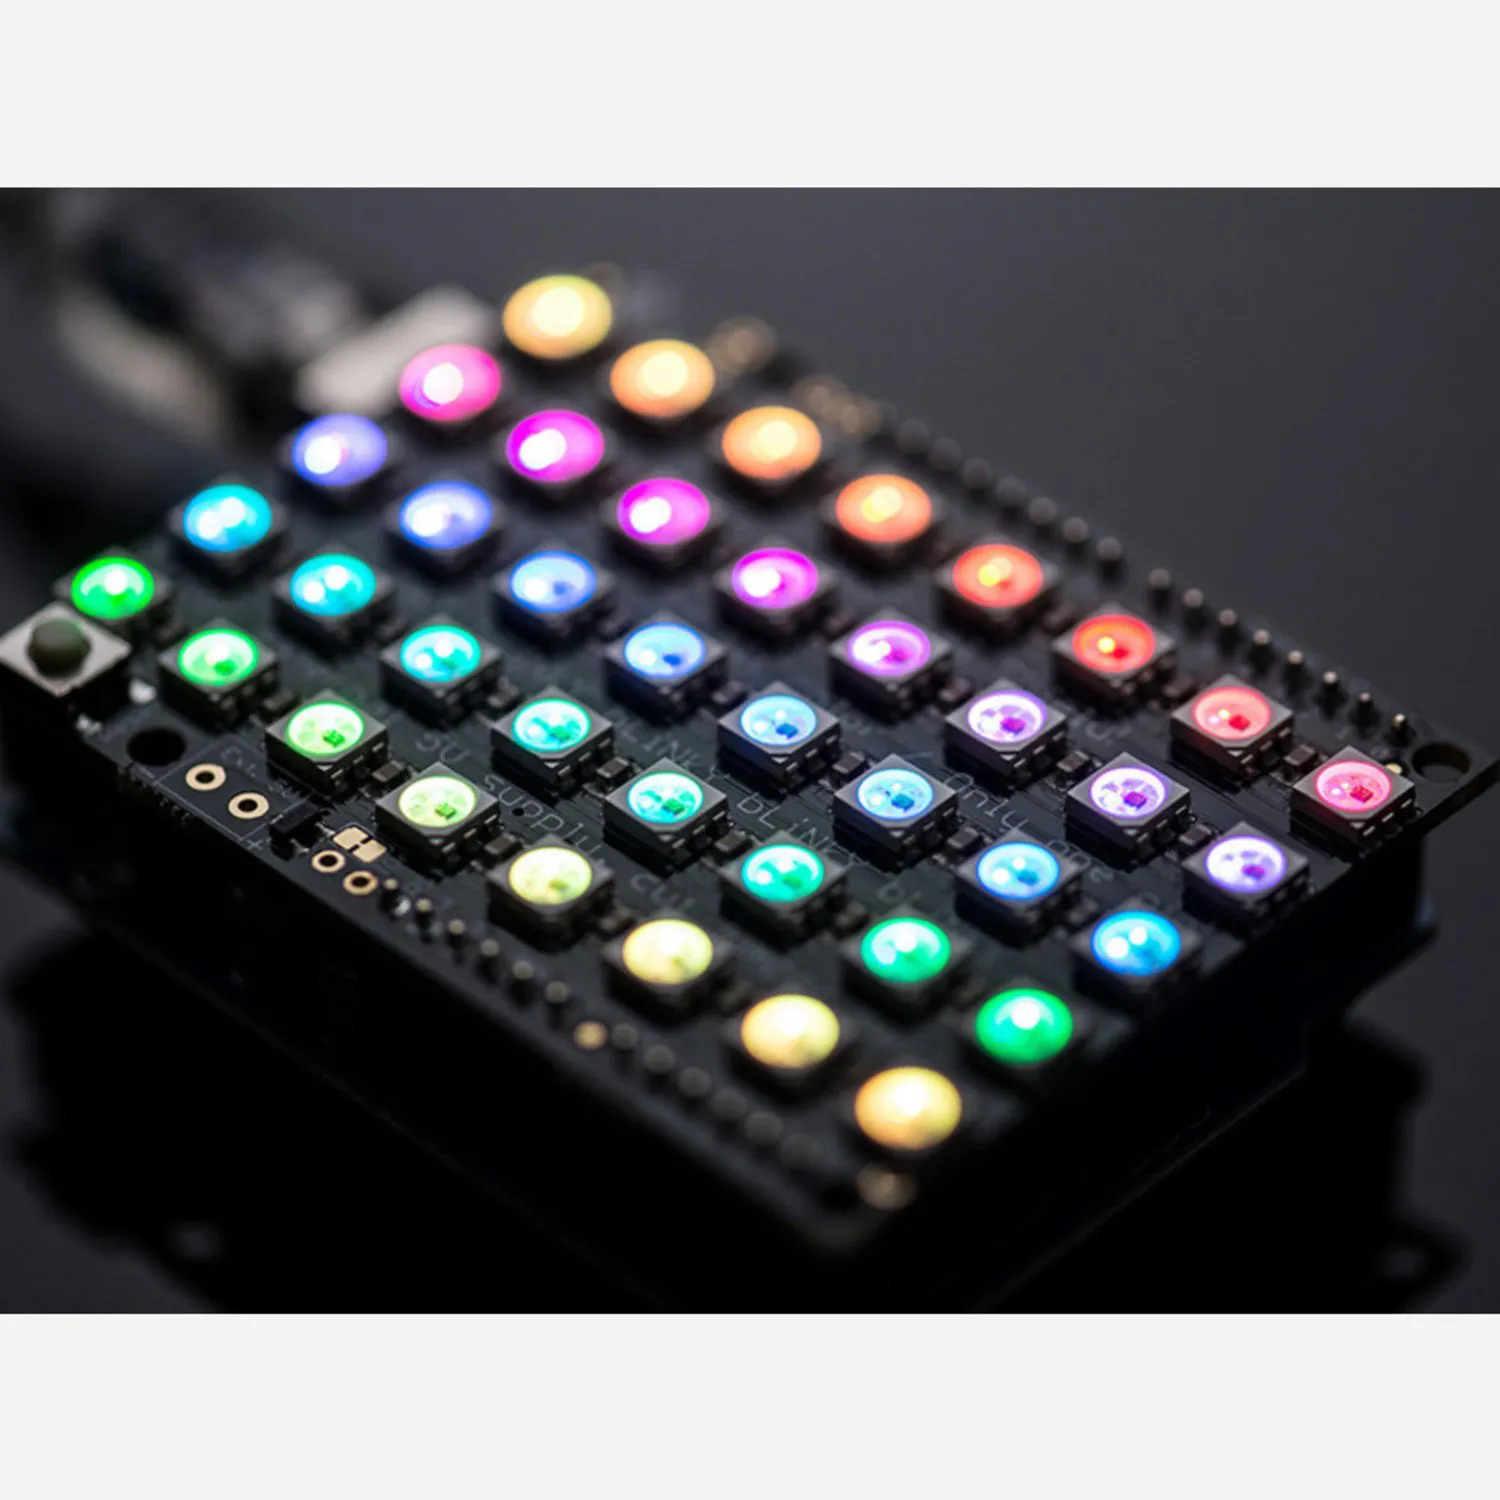 Photo of Adafruit NeoPixel Shield for Arduino - 40 RGB LED Pixel Matrix